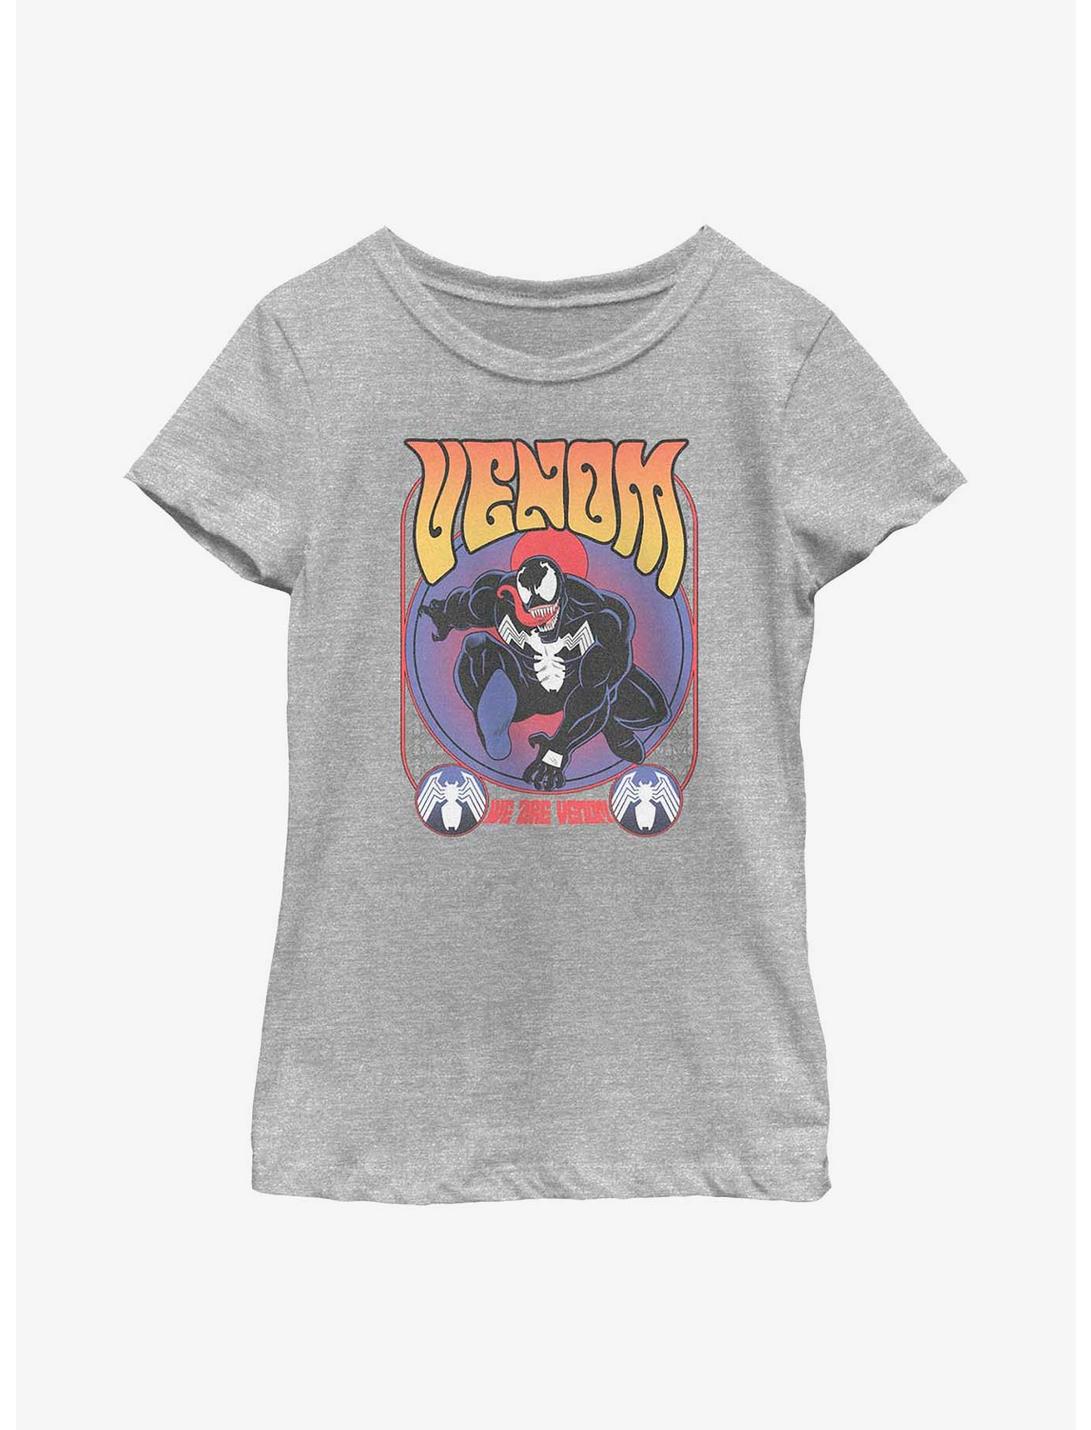 Marvel Venom Groovy Youth Girls T-Shirt, ATH HTR, hi-res